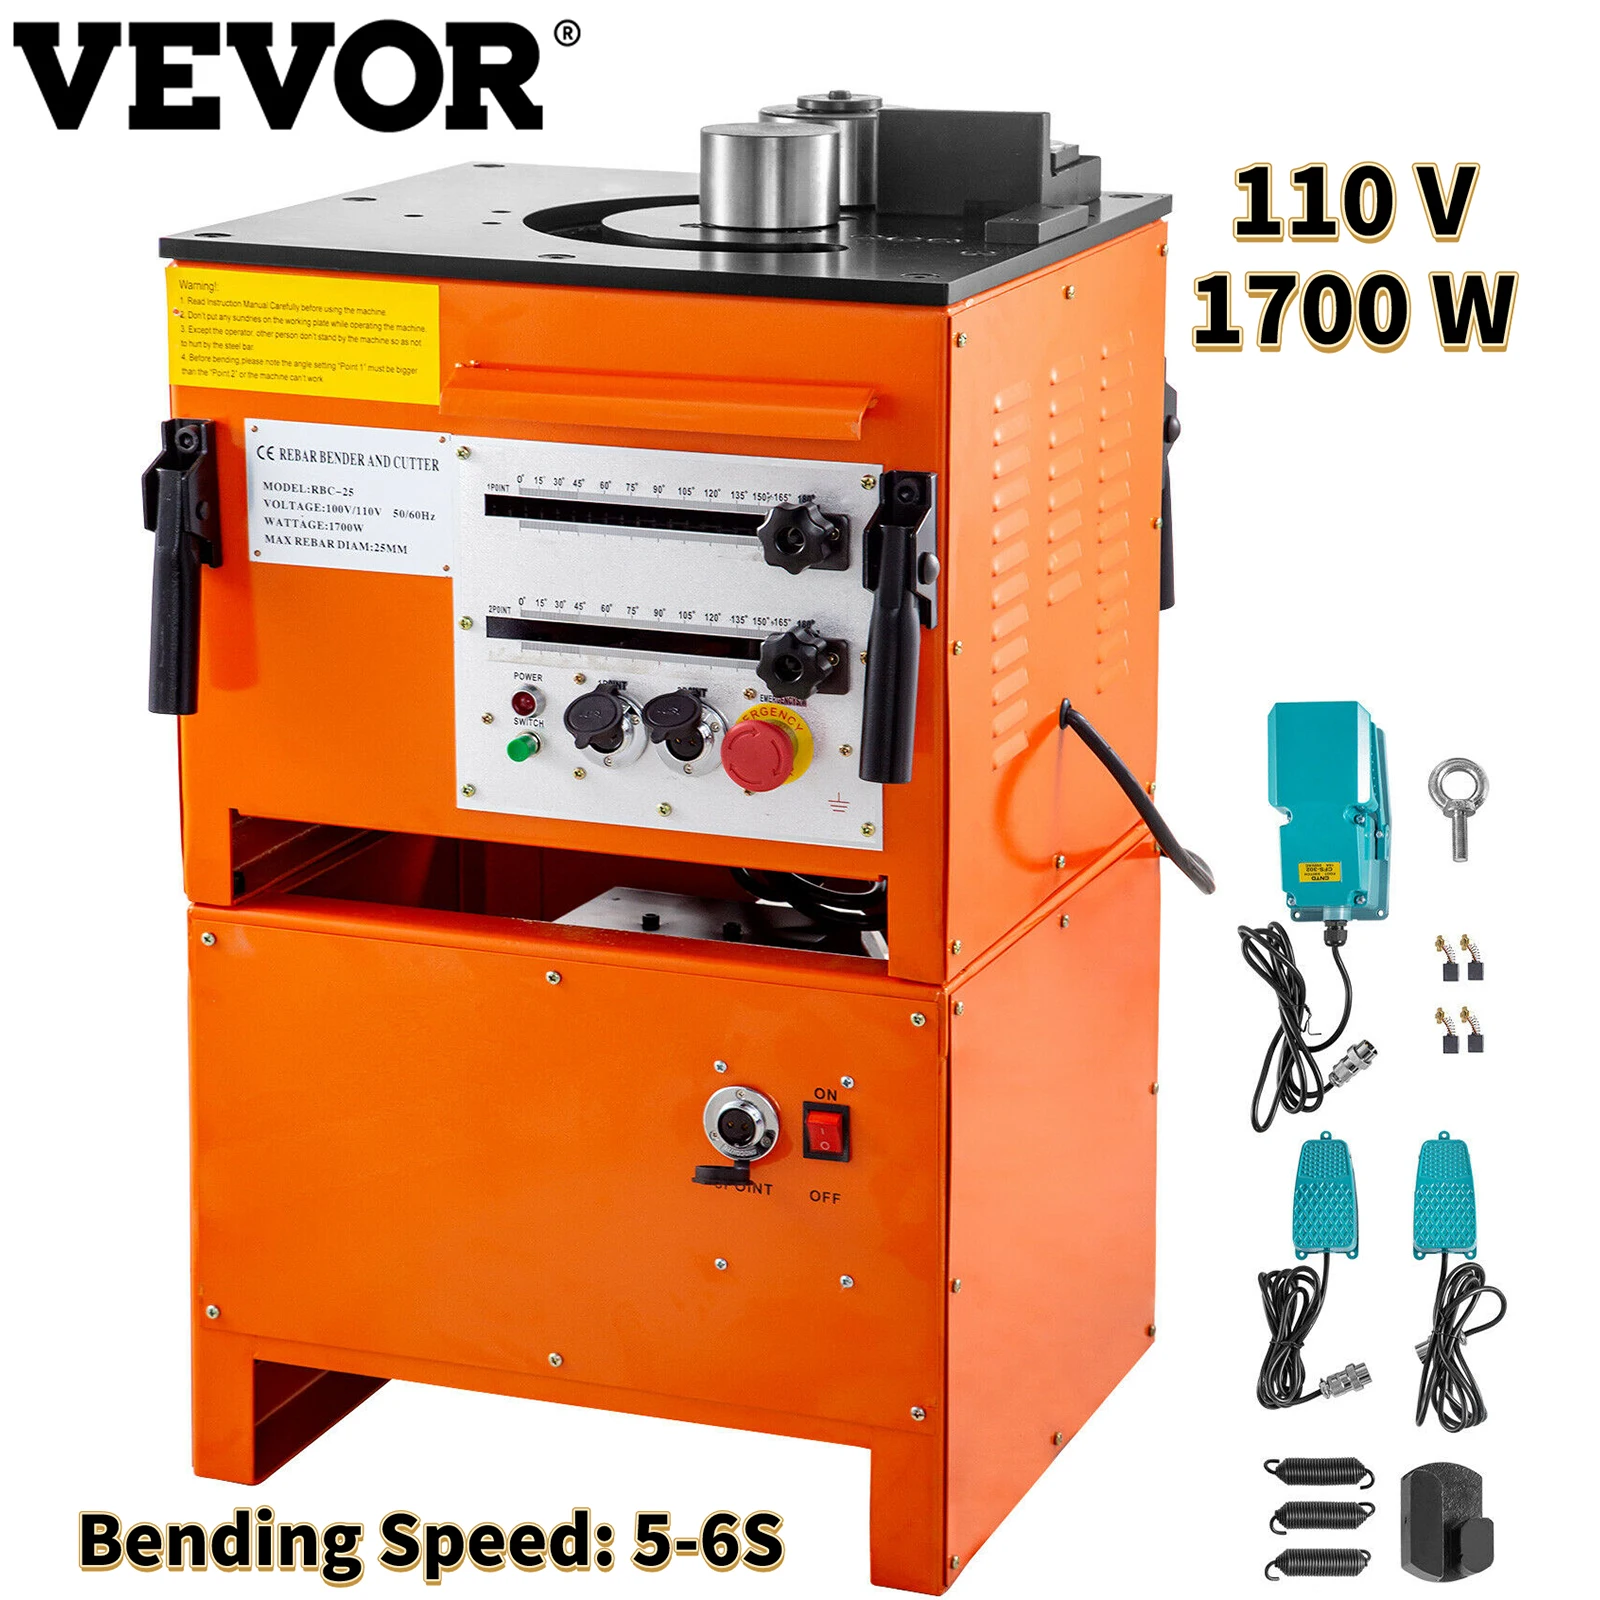 

VEVOR Electric Hydraulic Rebar Bender Cutter W/ Foot Pedals 1700W 110V Bending Speed 5-6S 6mm-25mm for Bending Rebar Steel Bars